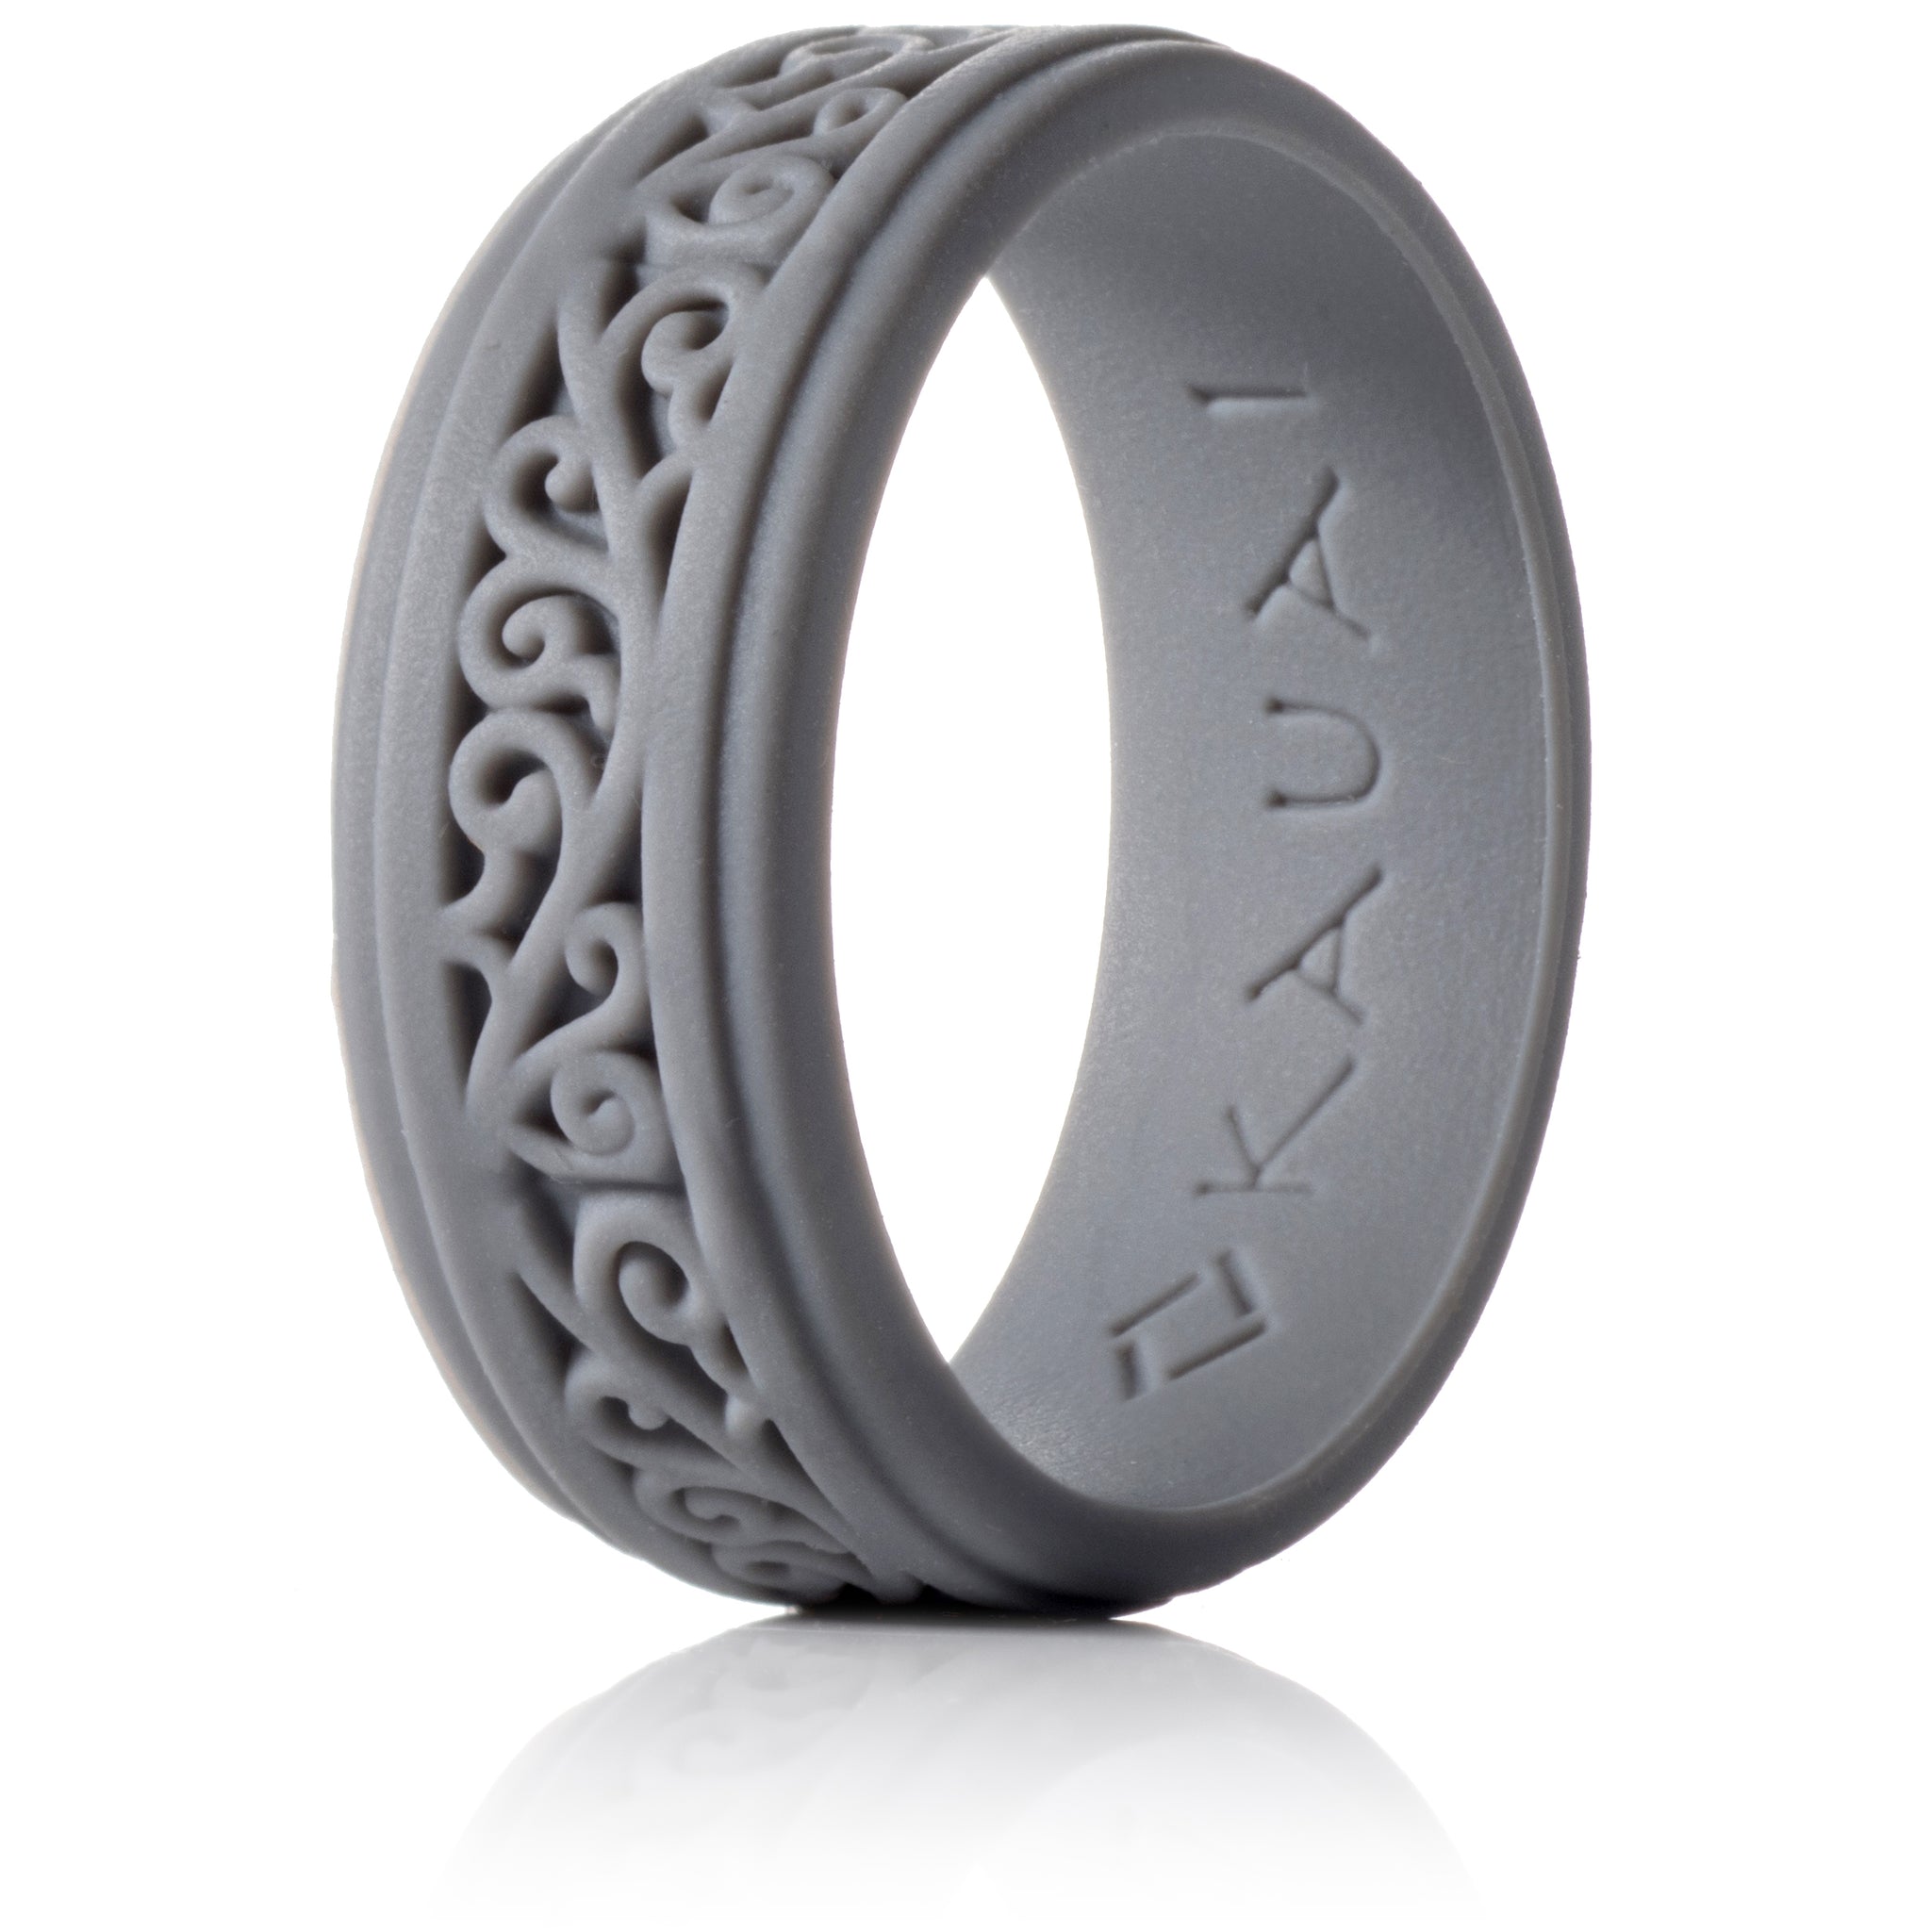 Women's Slate Gray, Kauai Active Series Silicone Ring - Kauai Innovations